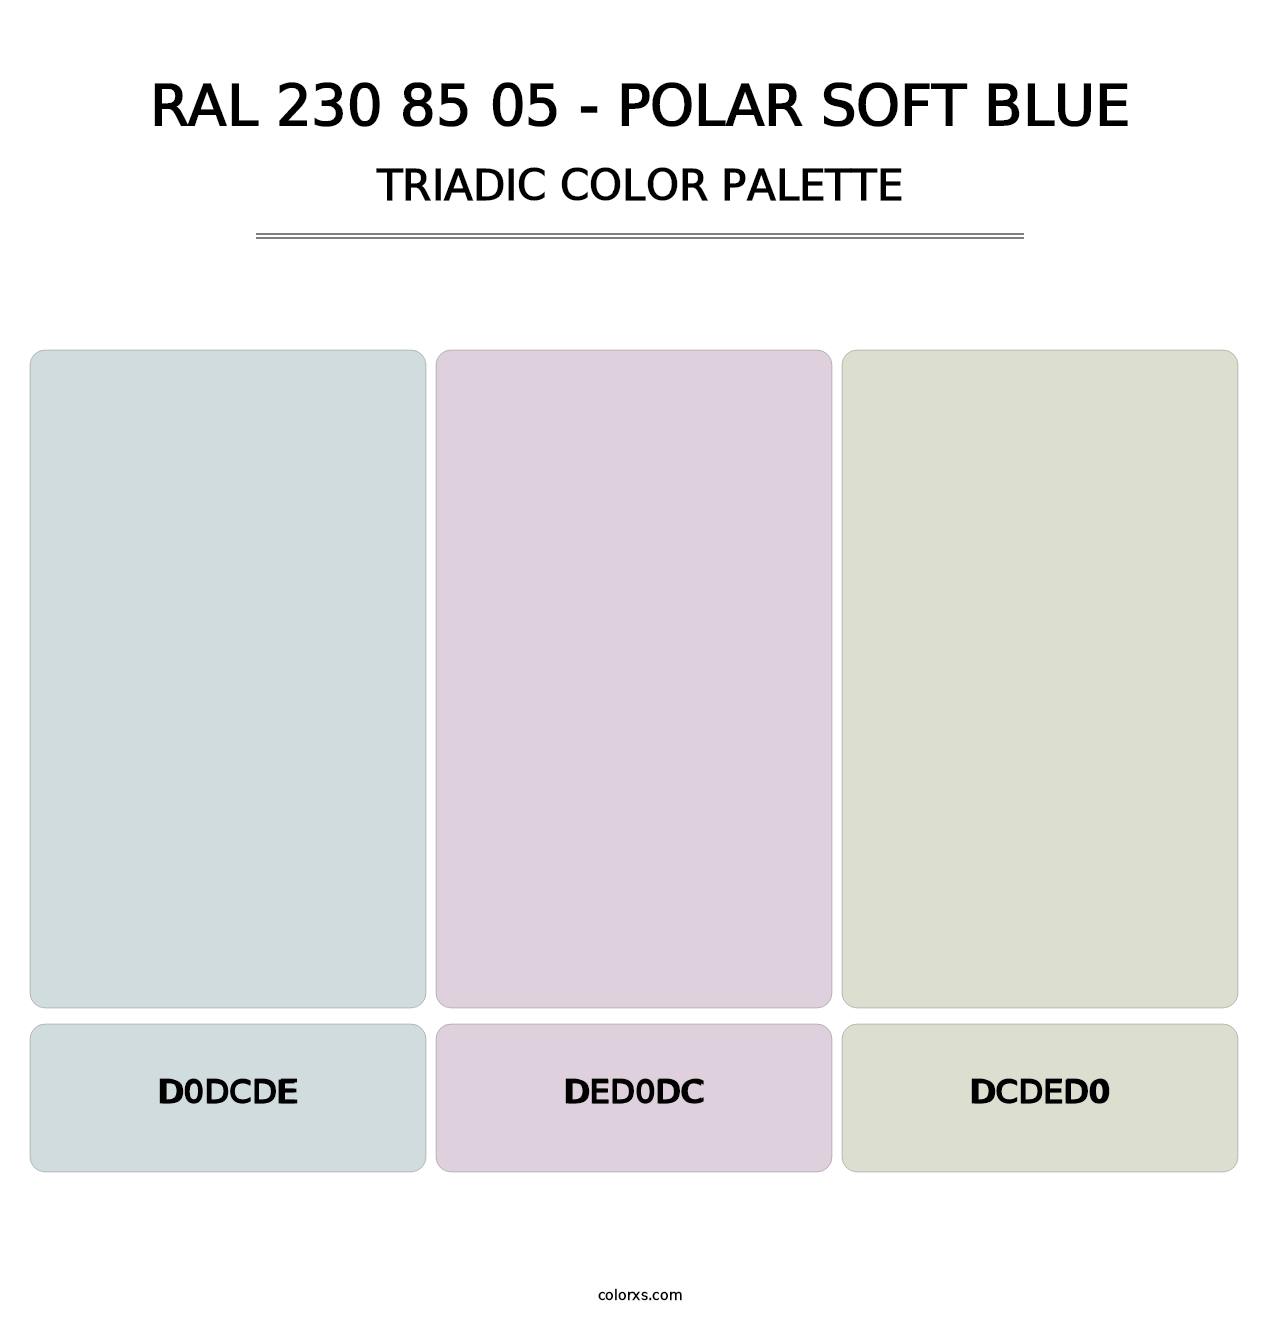 RAL 230 85 05 - Polar Soft Blue - Triadic Color Palette